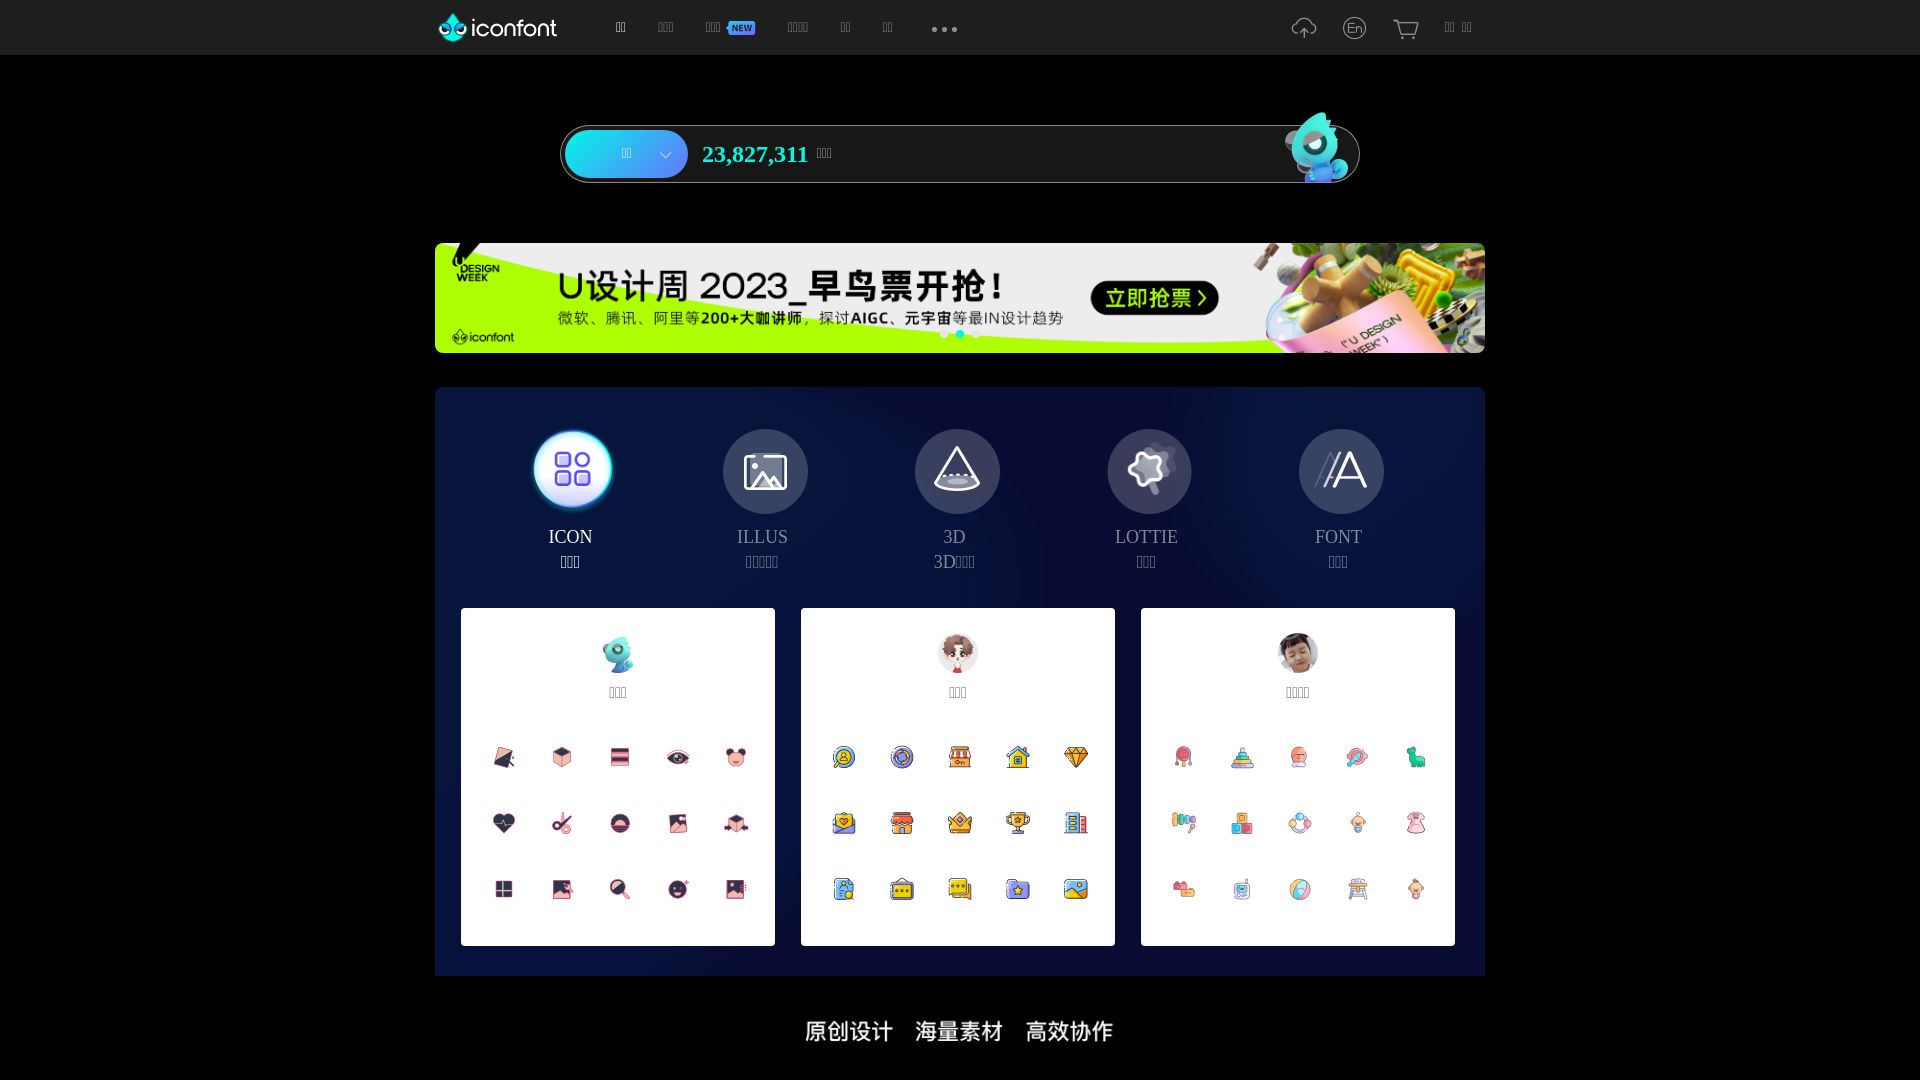 Estado web iconfont.cn está   ONLINE